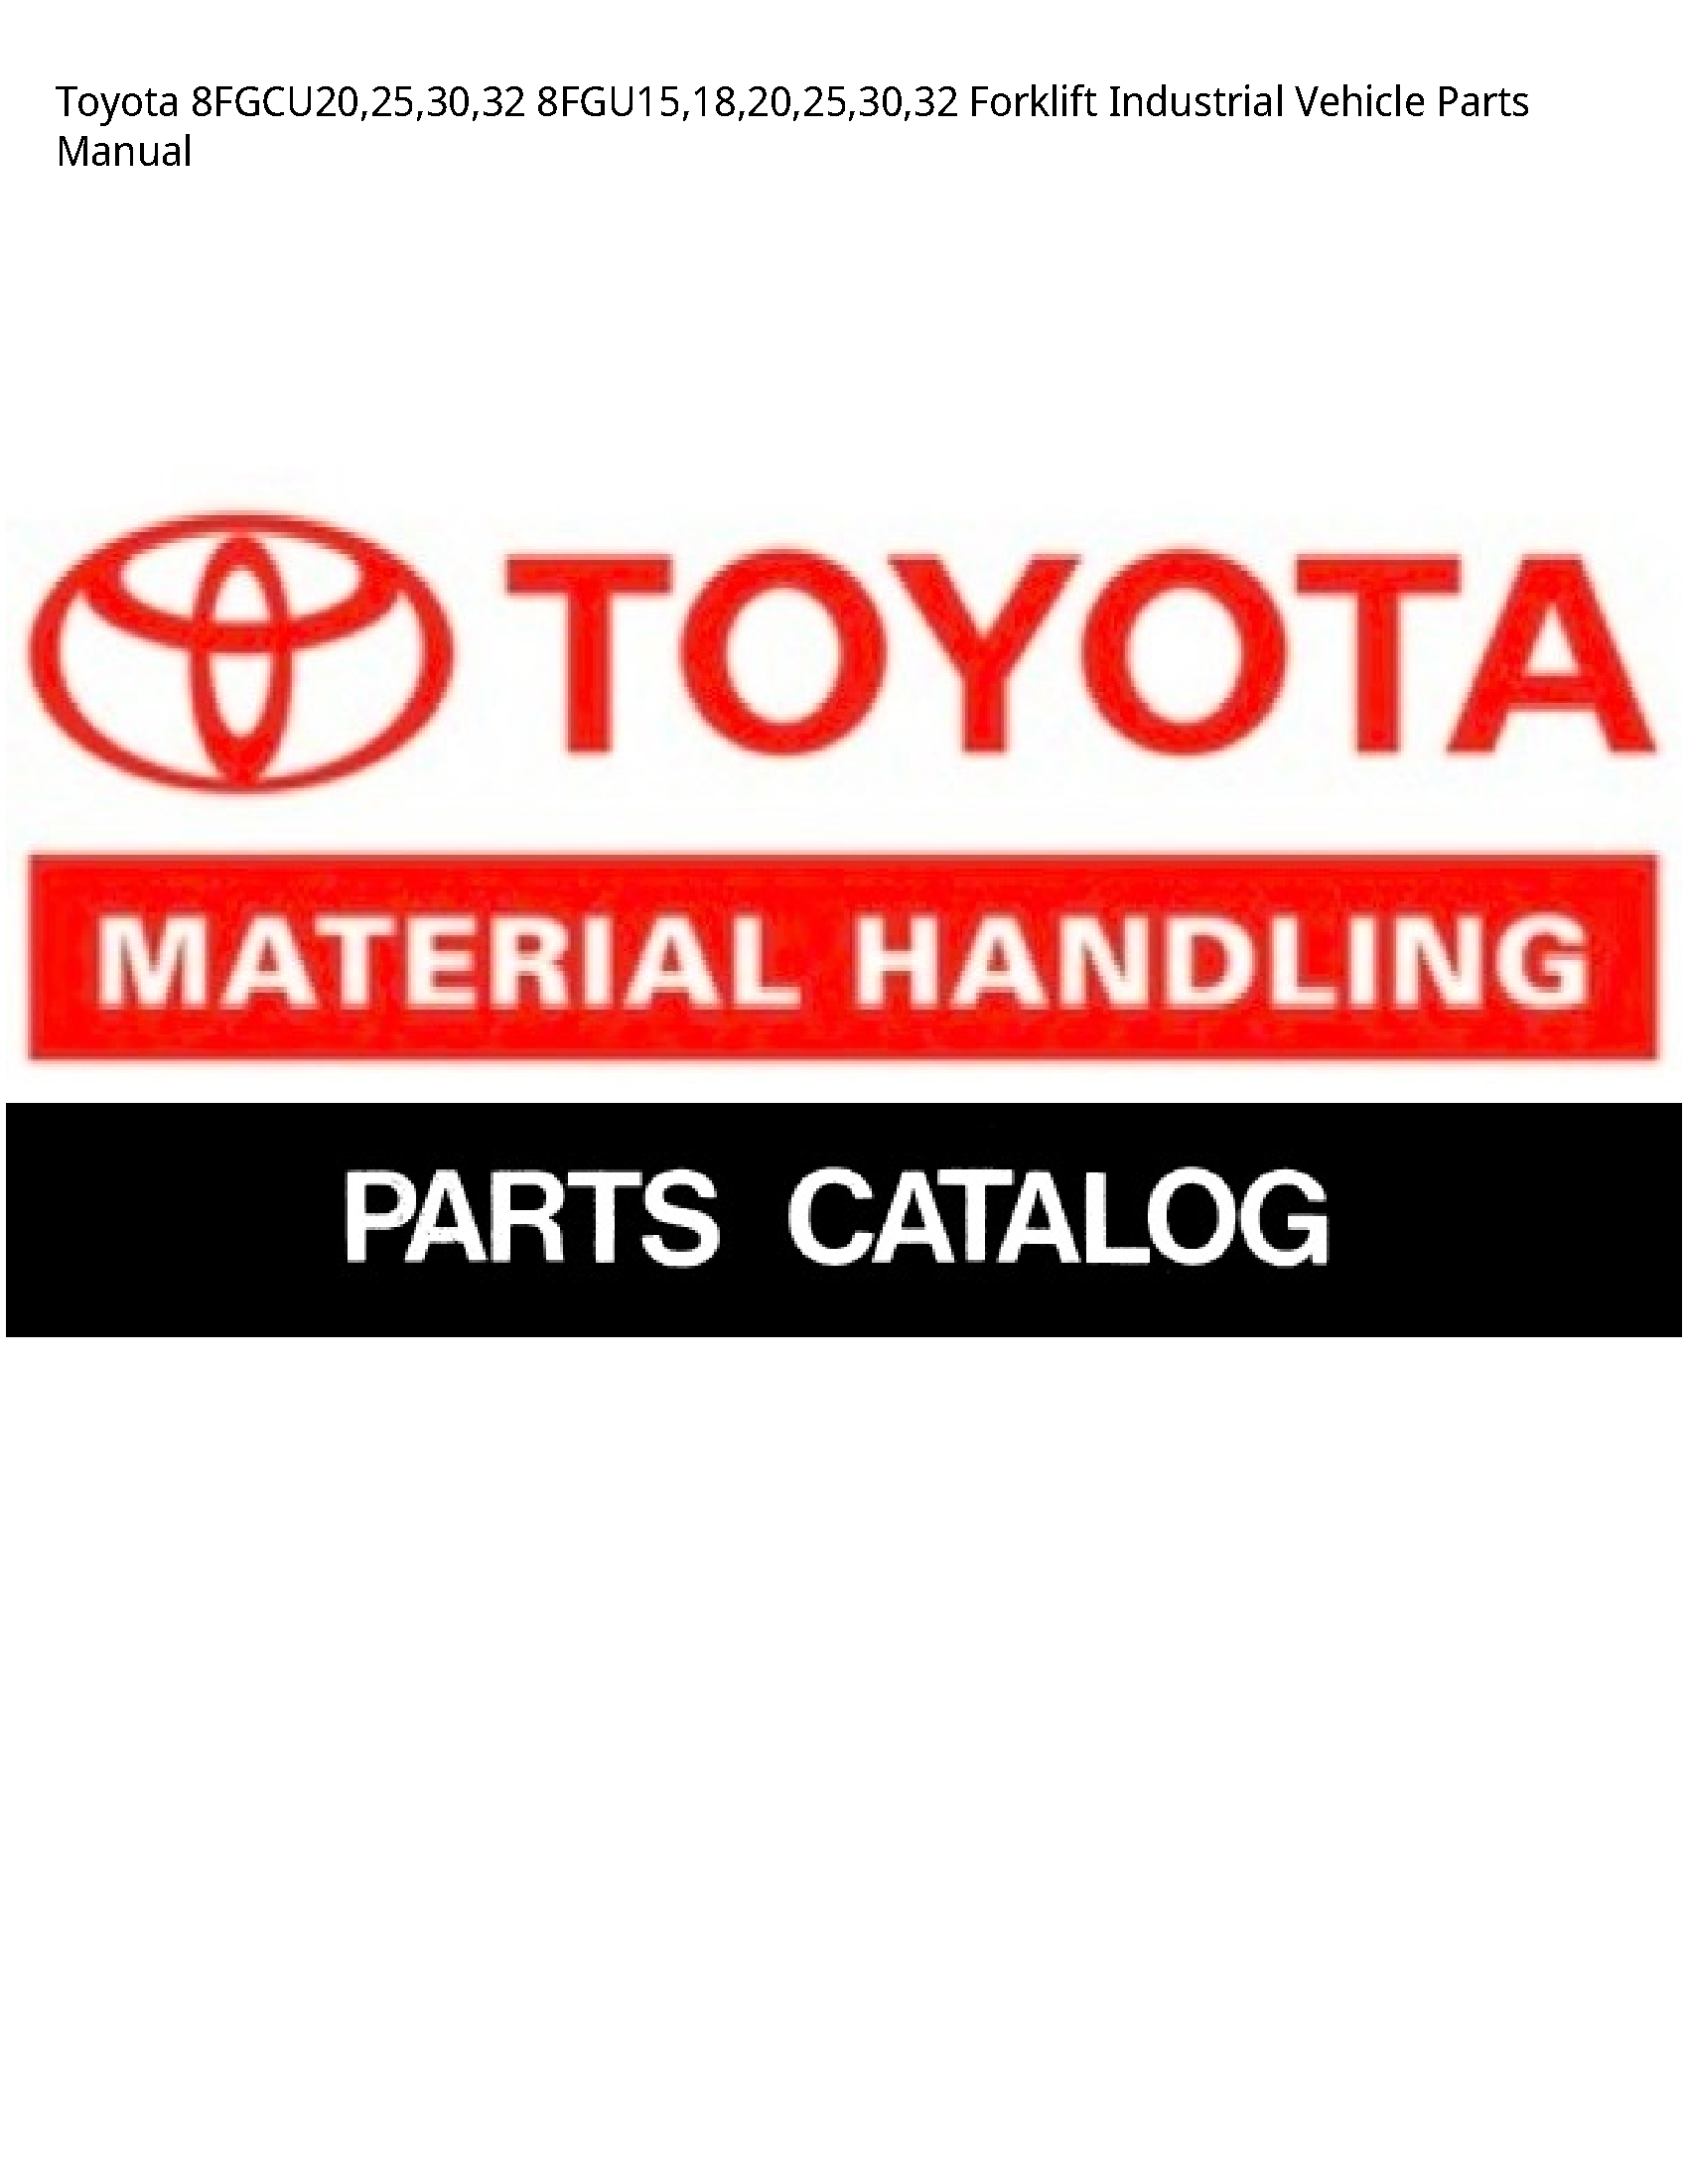 Toyota 8FGCU20 Forklift Industrial Vehicle Parts manual